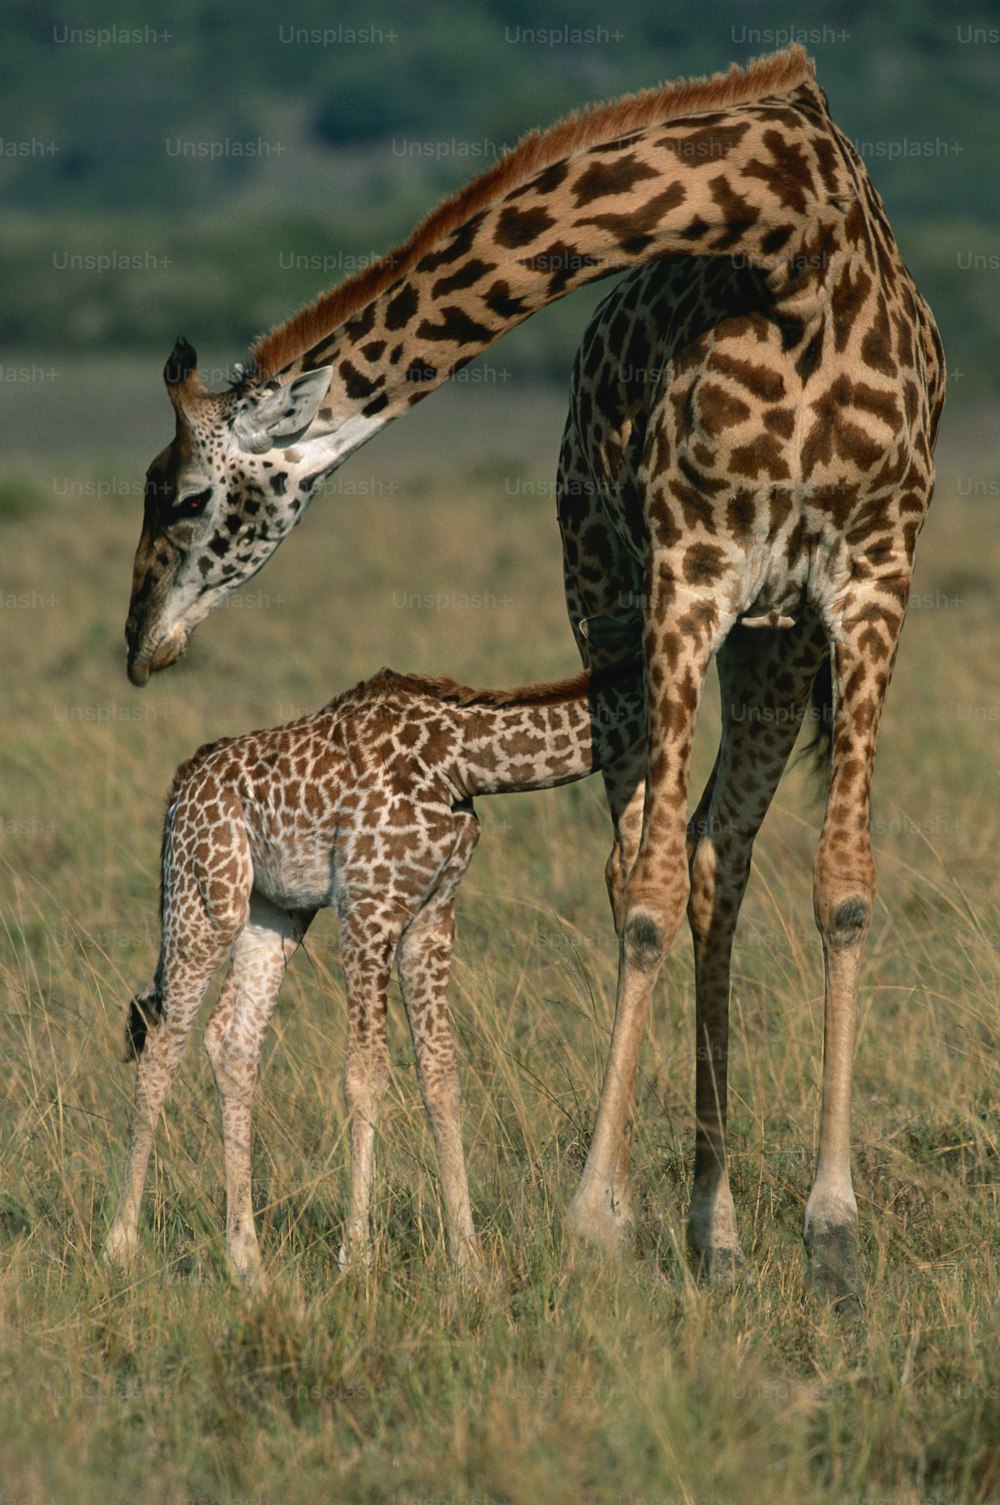 un bébé girafe debout à côté d’une girafe adulte